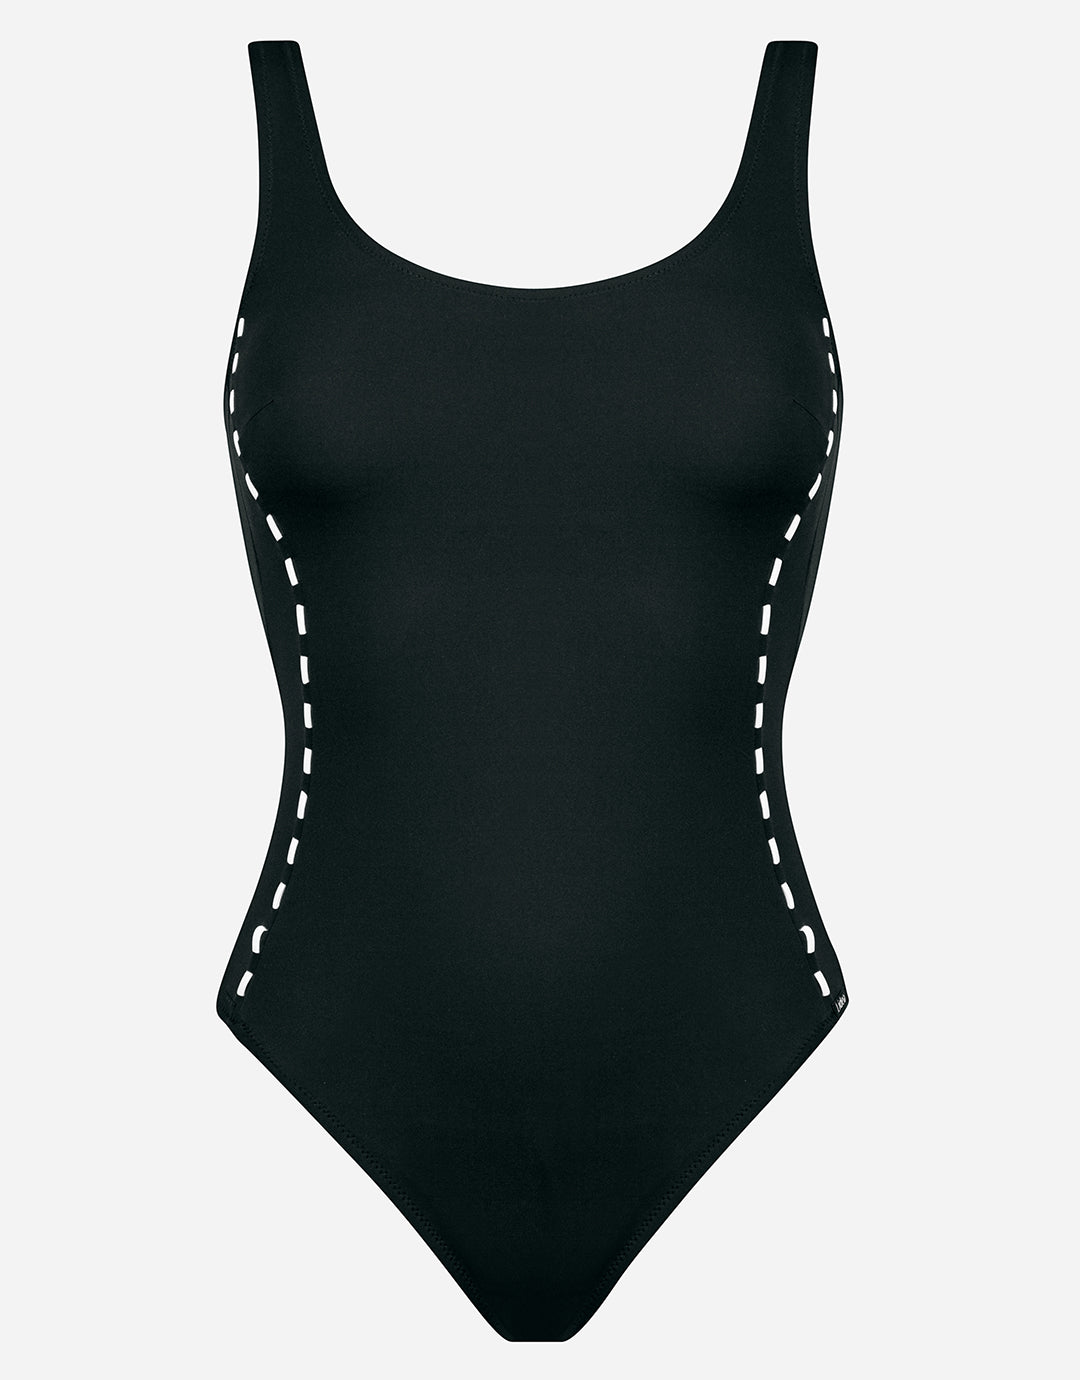 Marine Mindset Round Neck Swimsuit - Black and White - Simply Beach UK